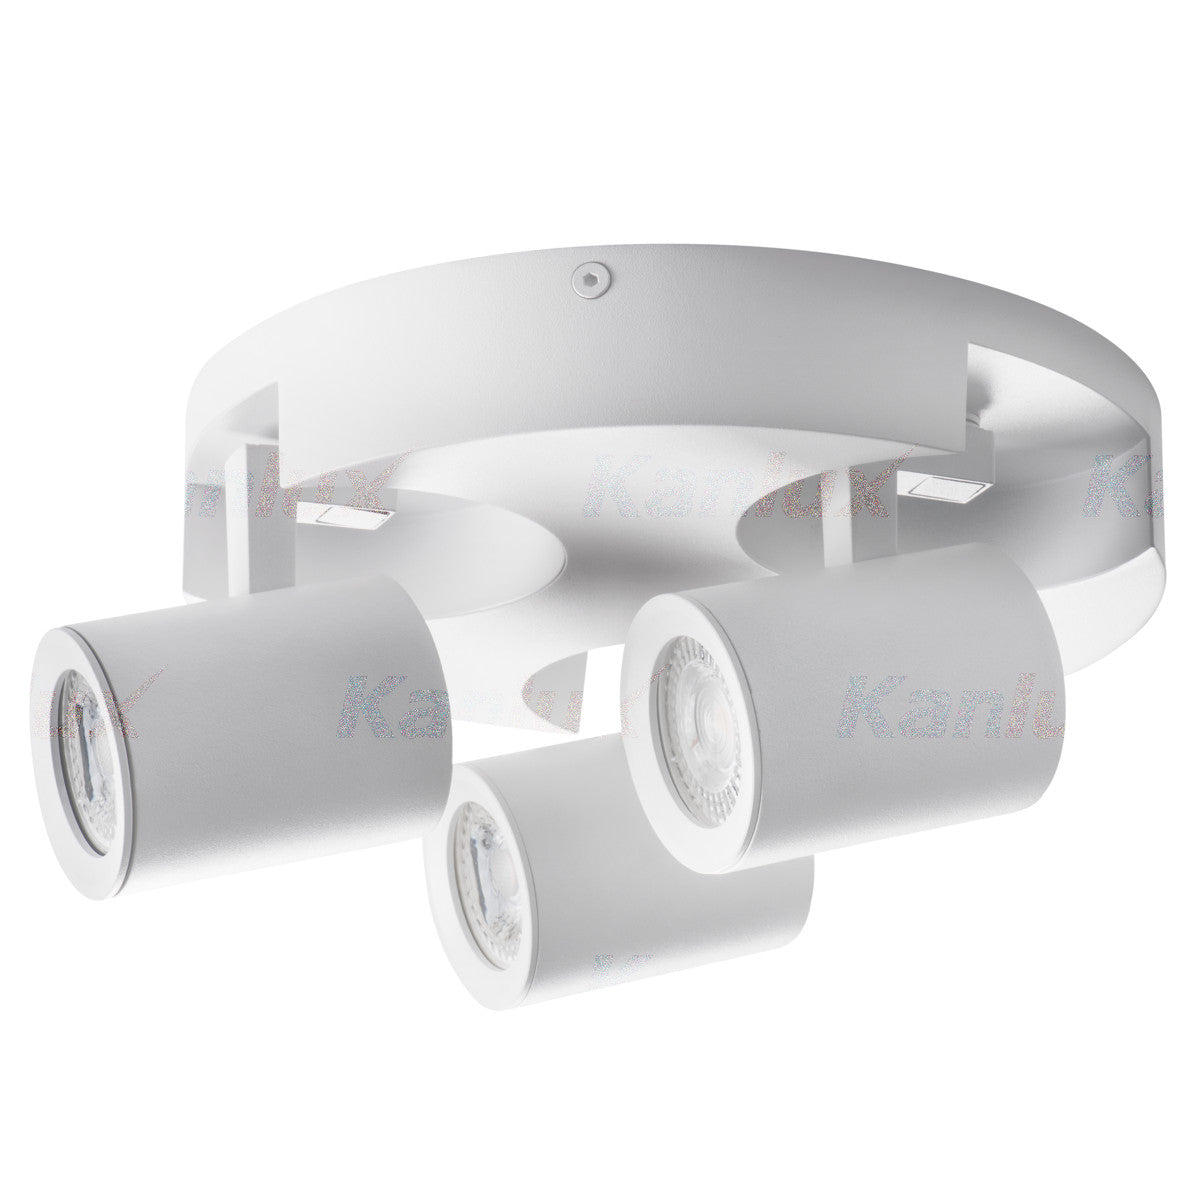 Kanlux LAURIN Adjustable Ceiling Surface GU10 Adjustable Spot Light Fitting